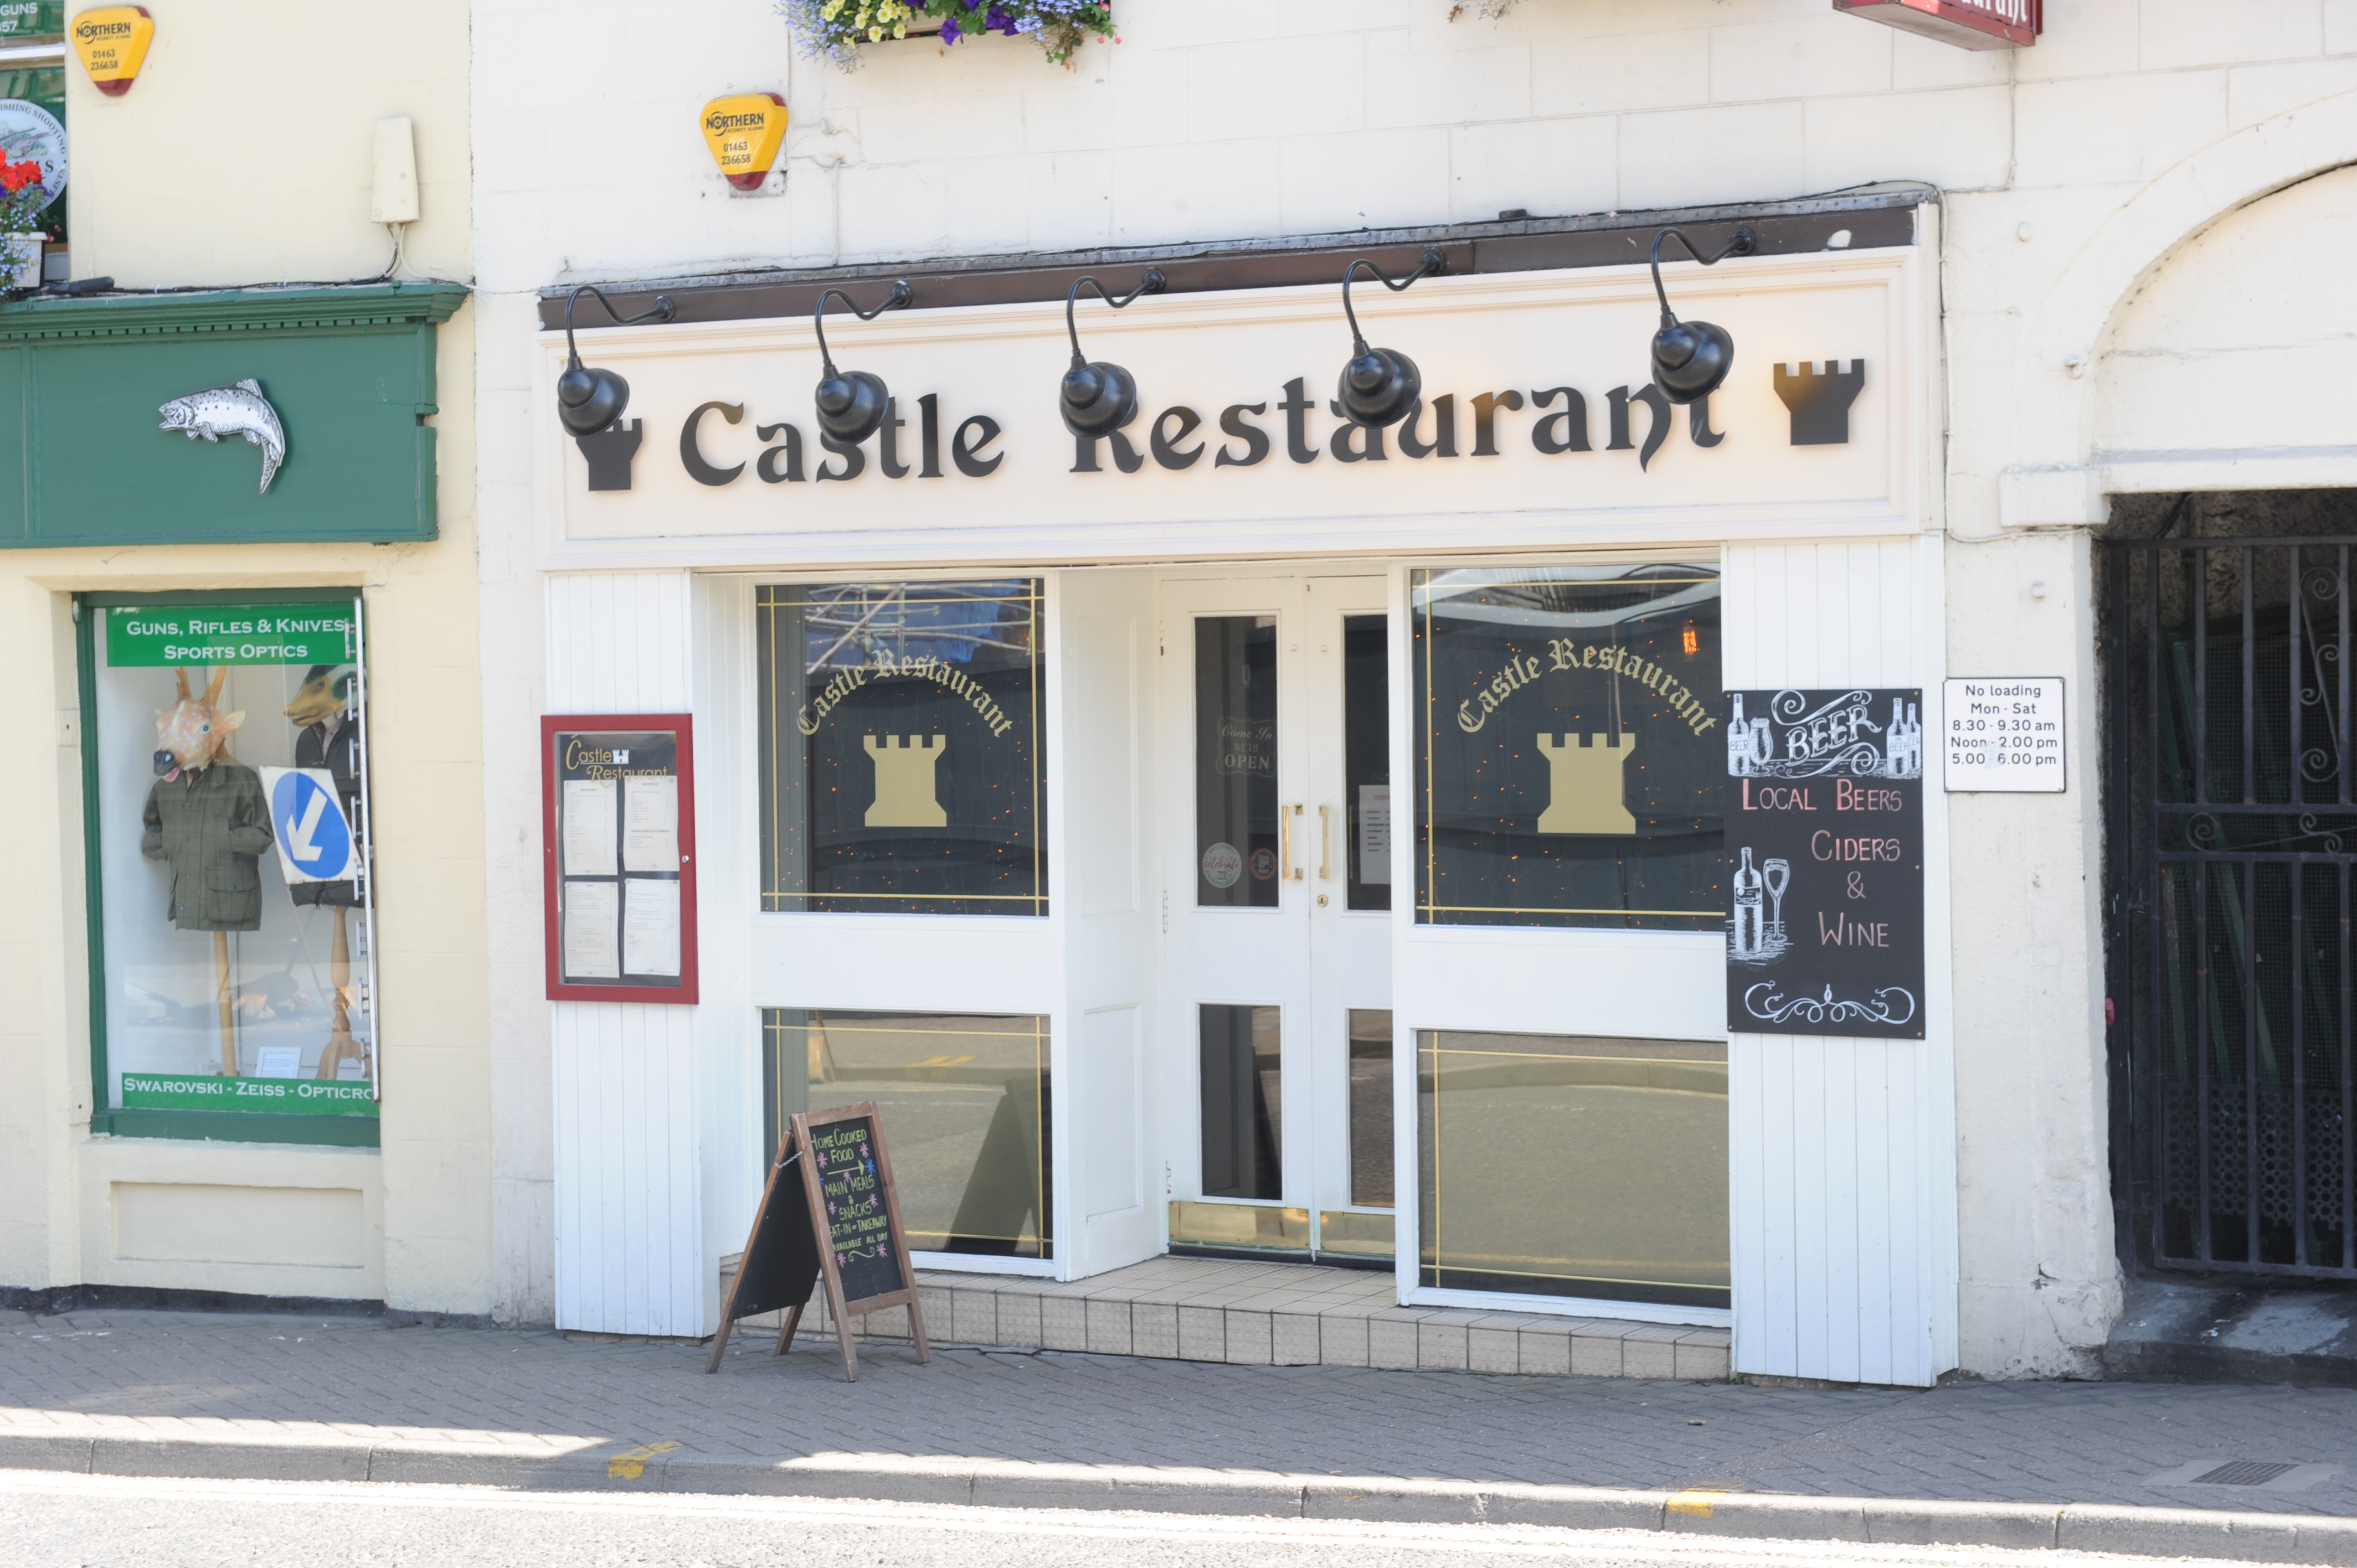 Inverness Castle Restaurant